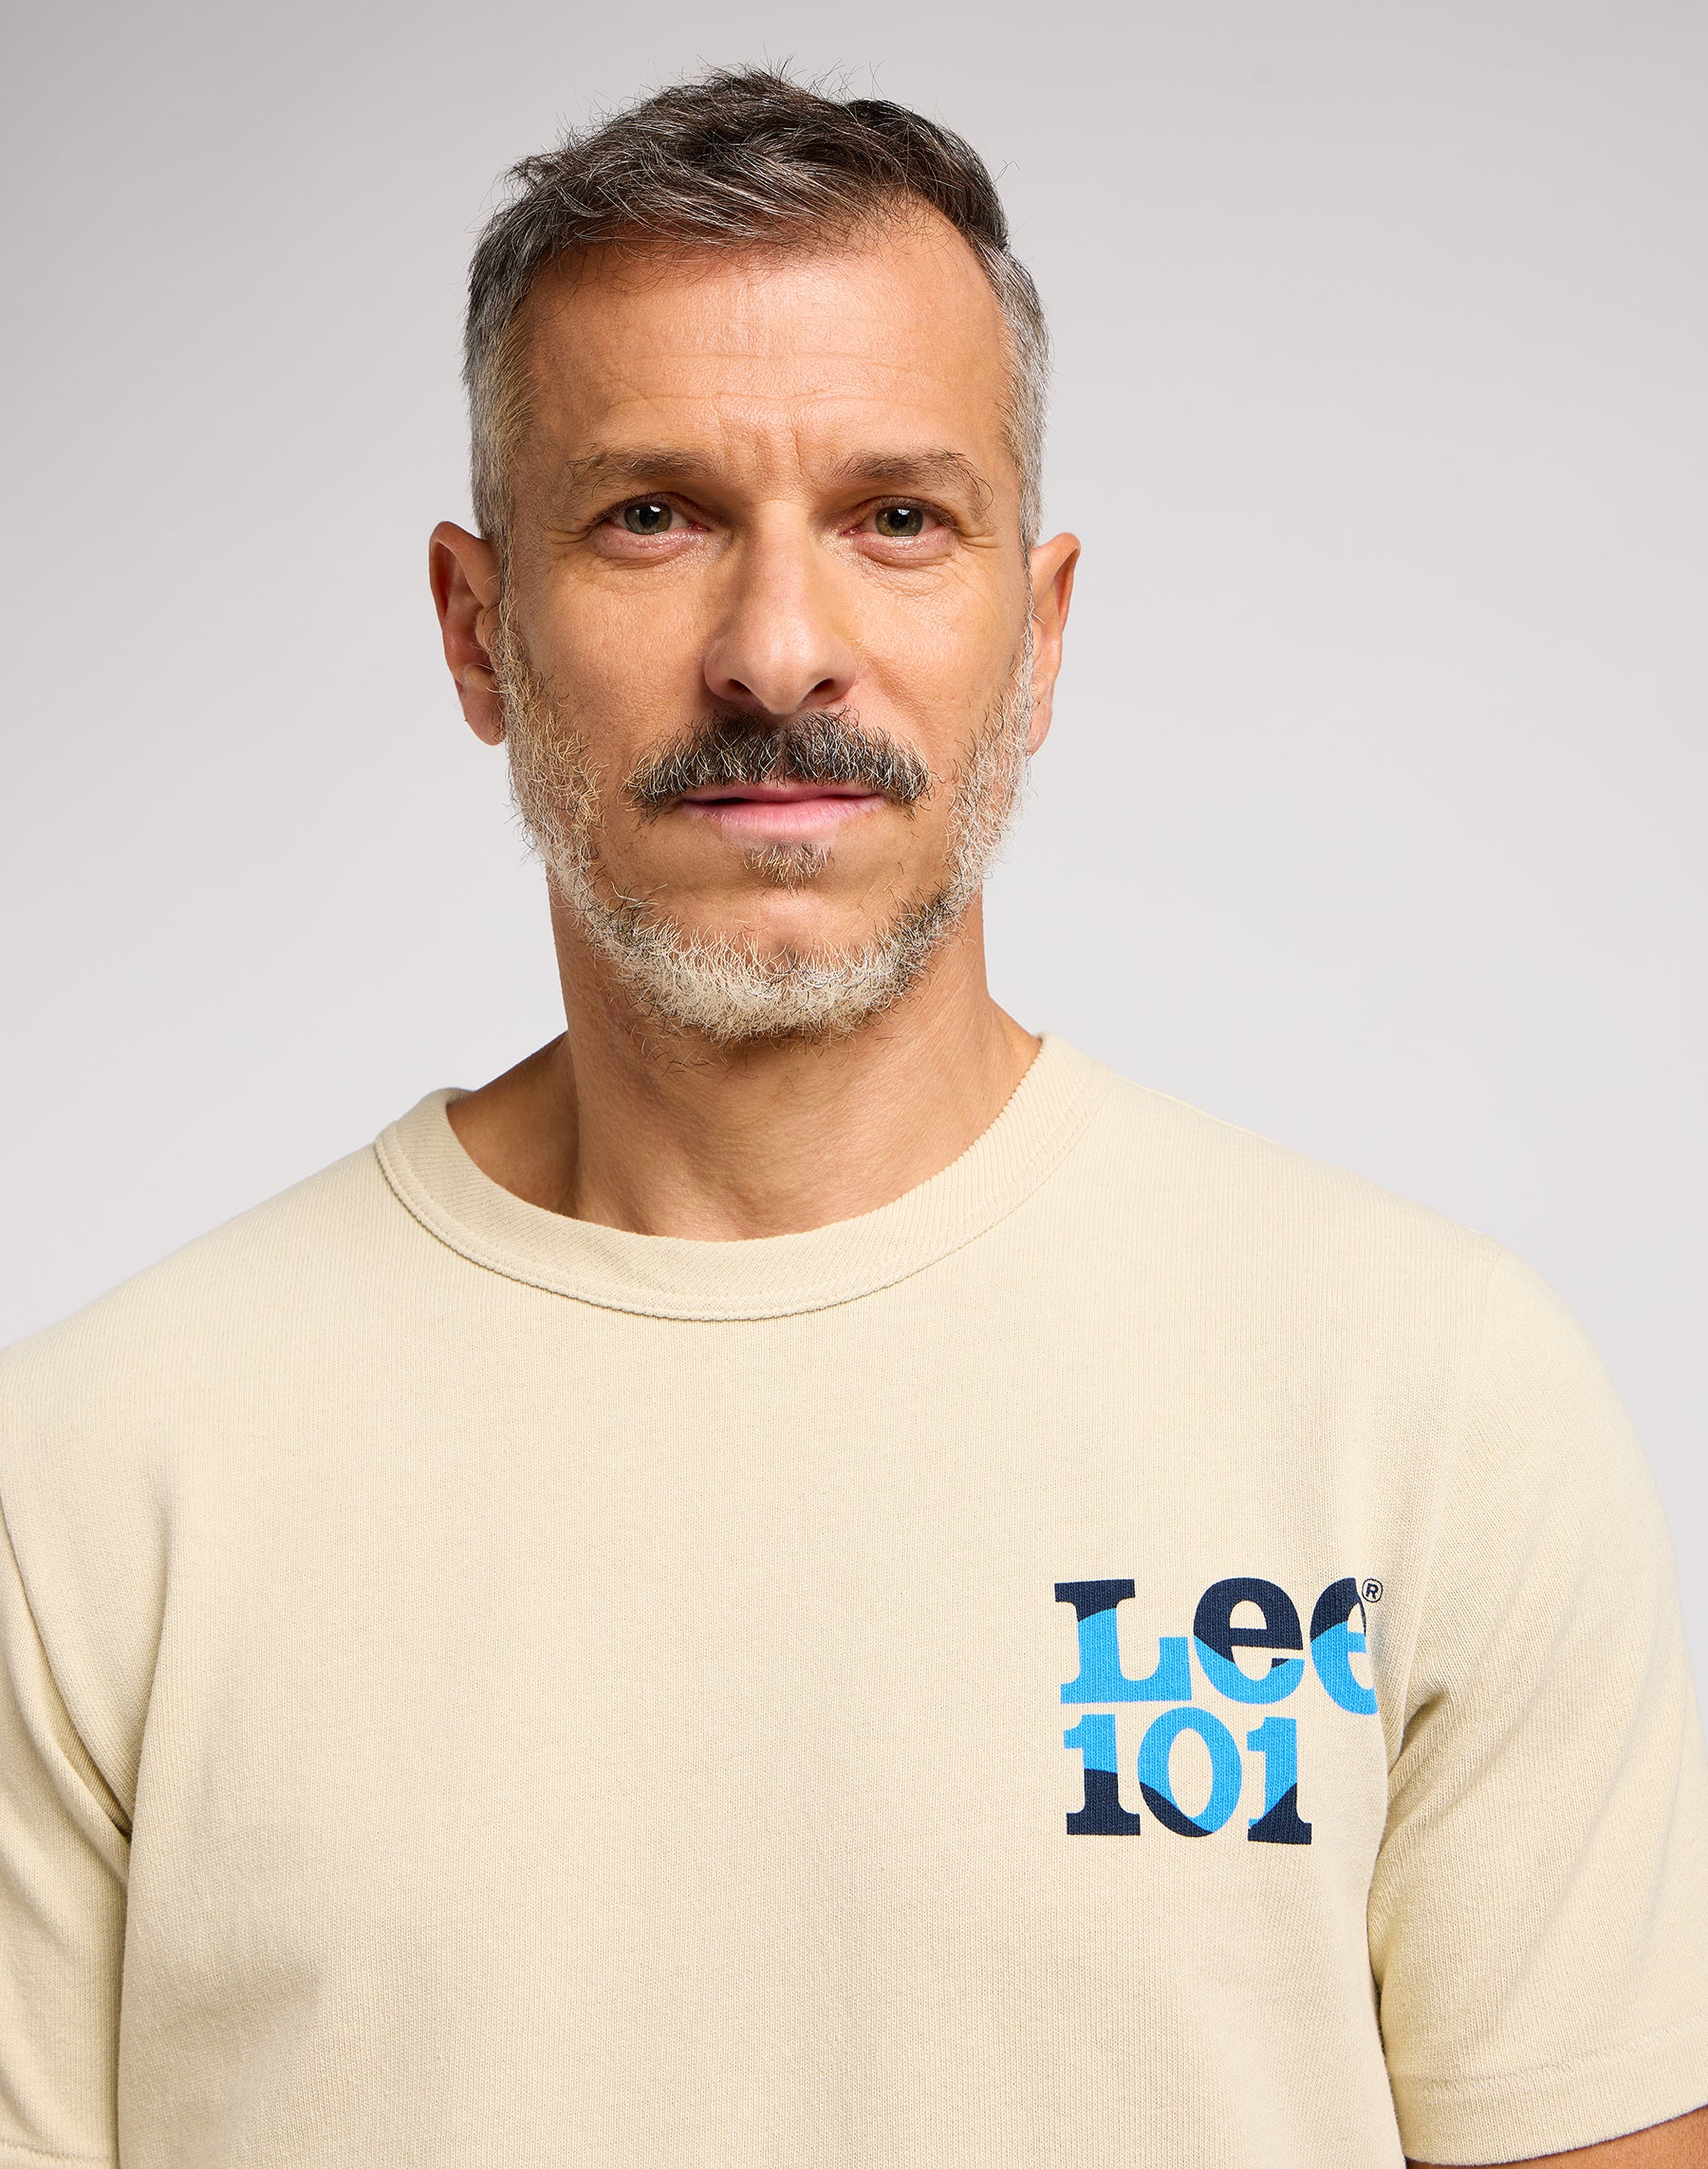 101 Tee in Greige T-Shirts Lee   